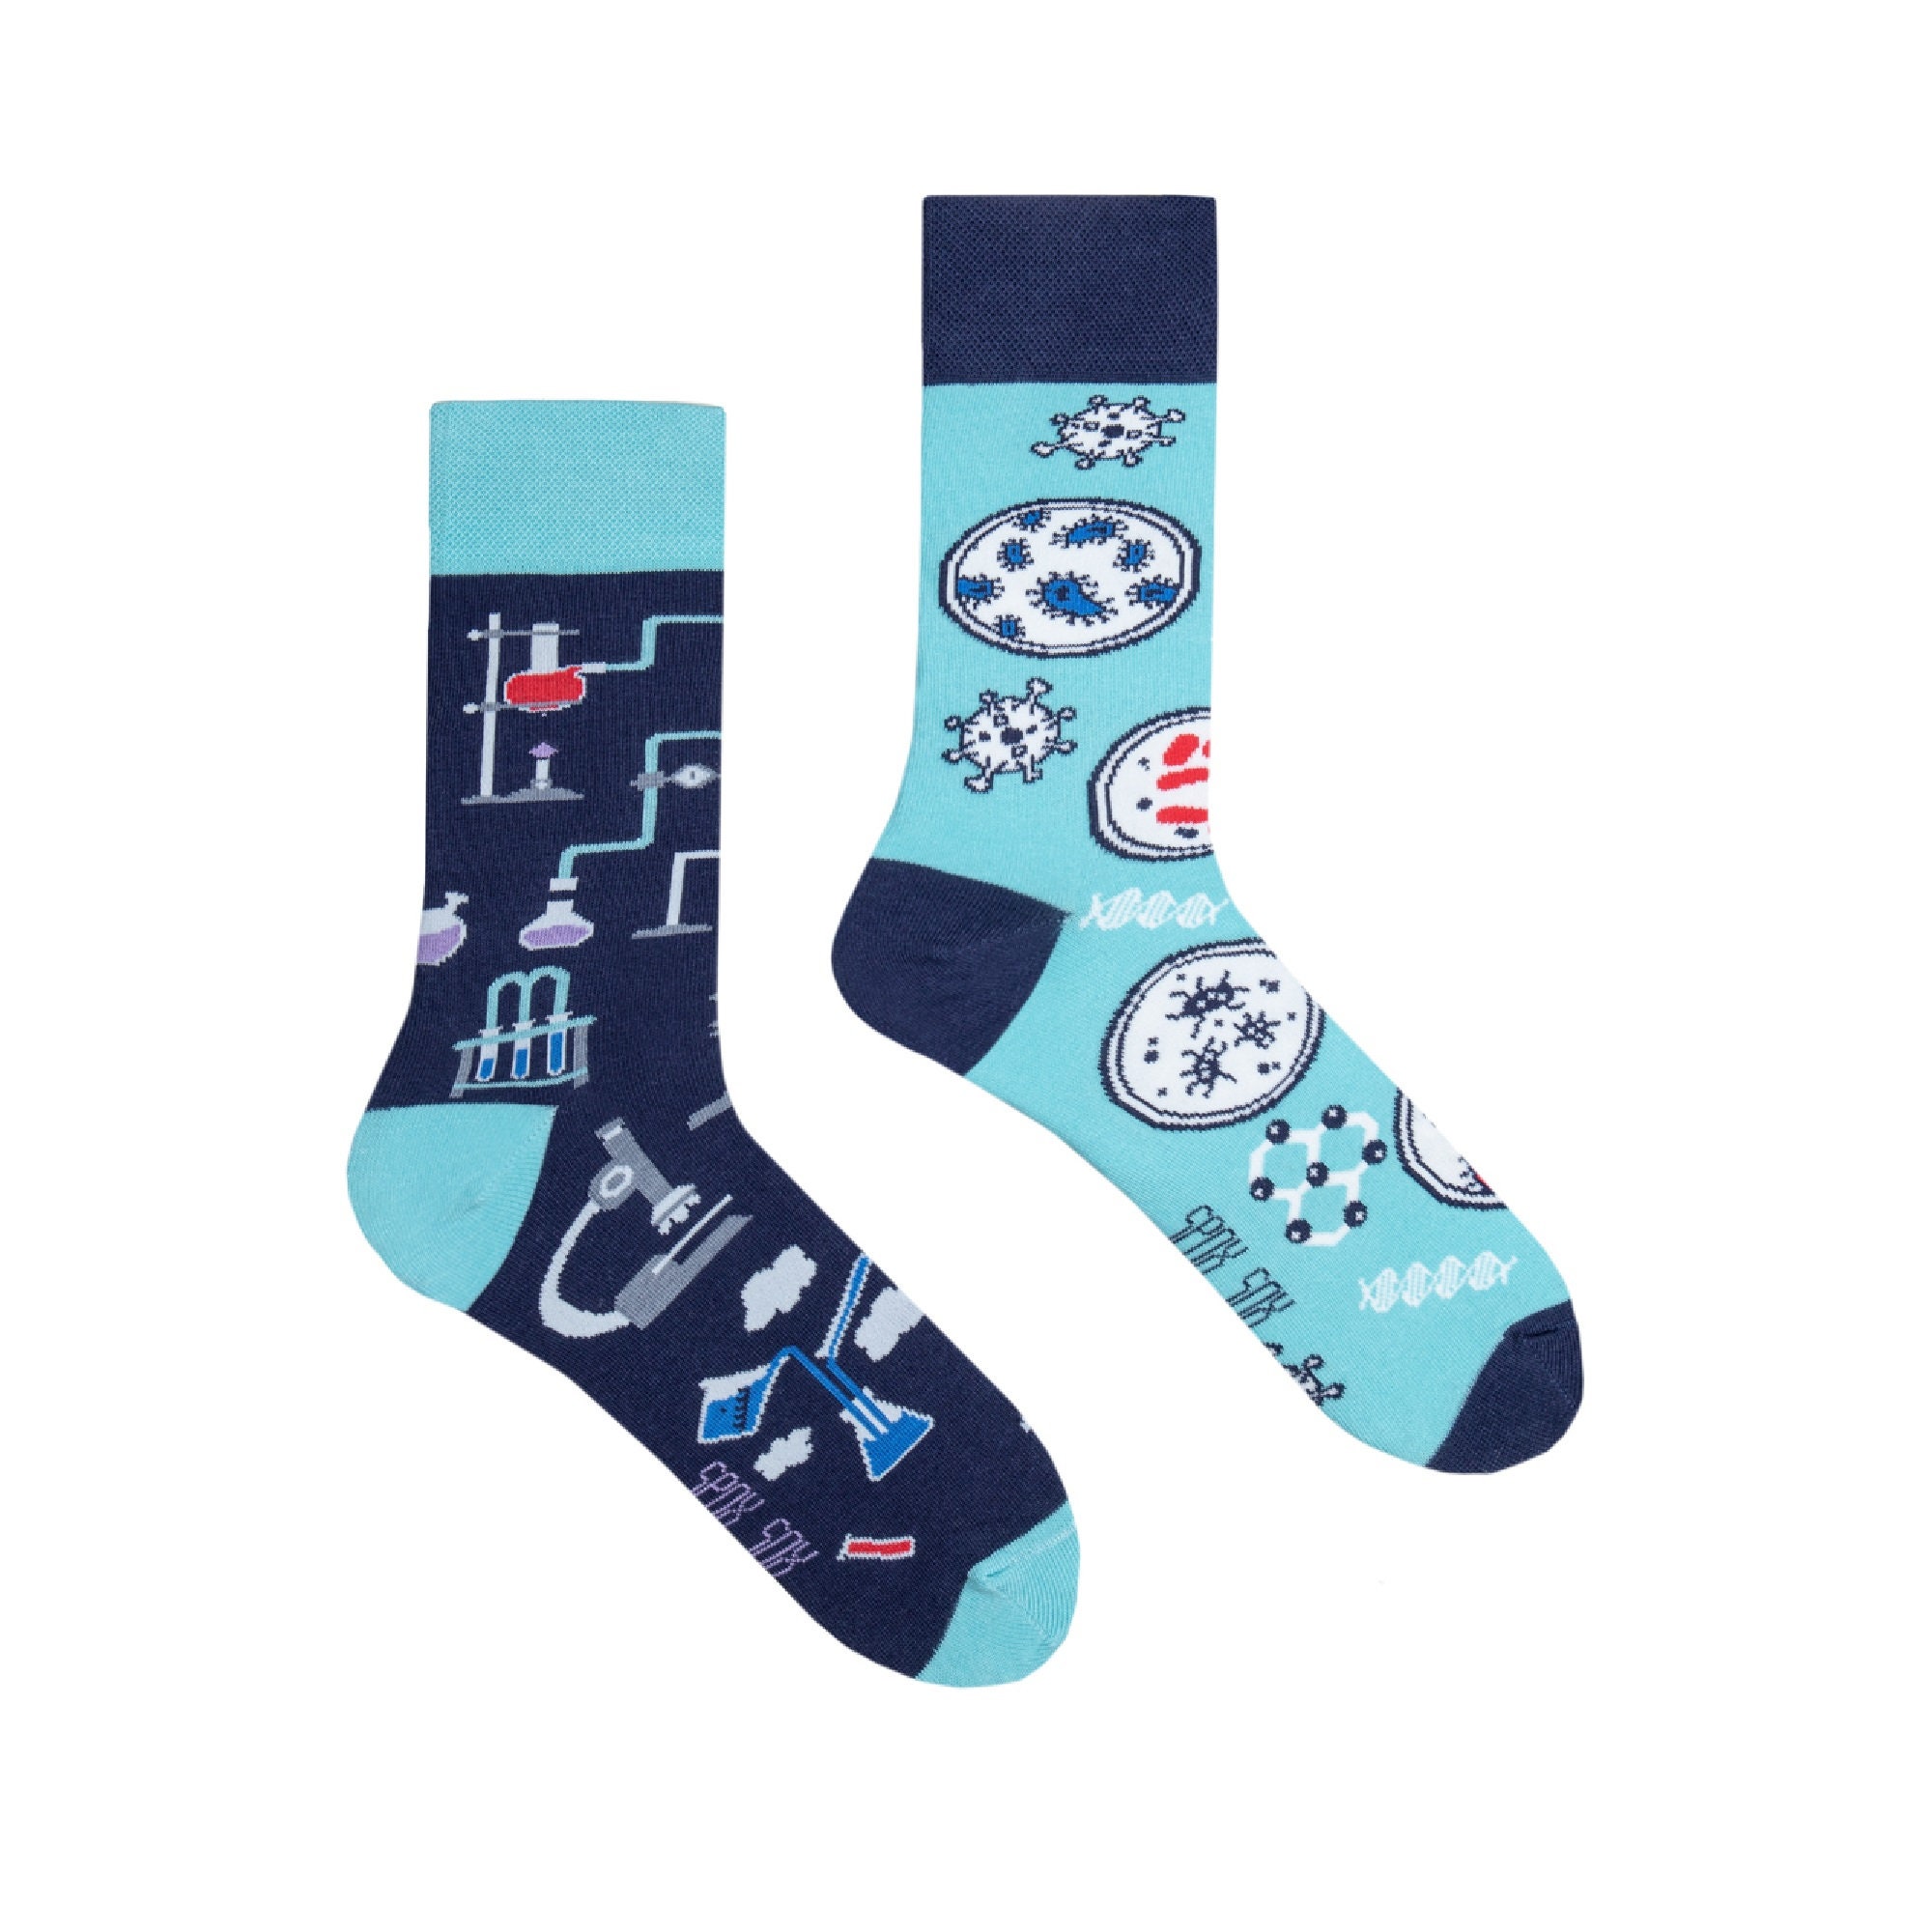 Lab Socks Laboratory Socks Medical Theme Socks Science - Etsy